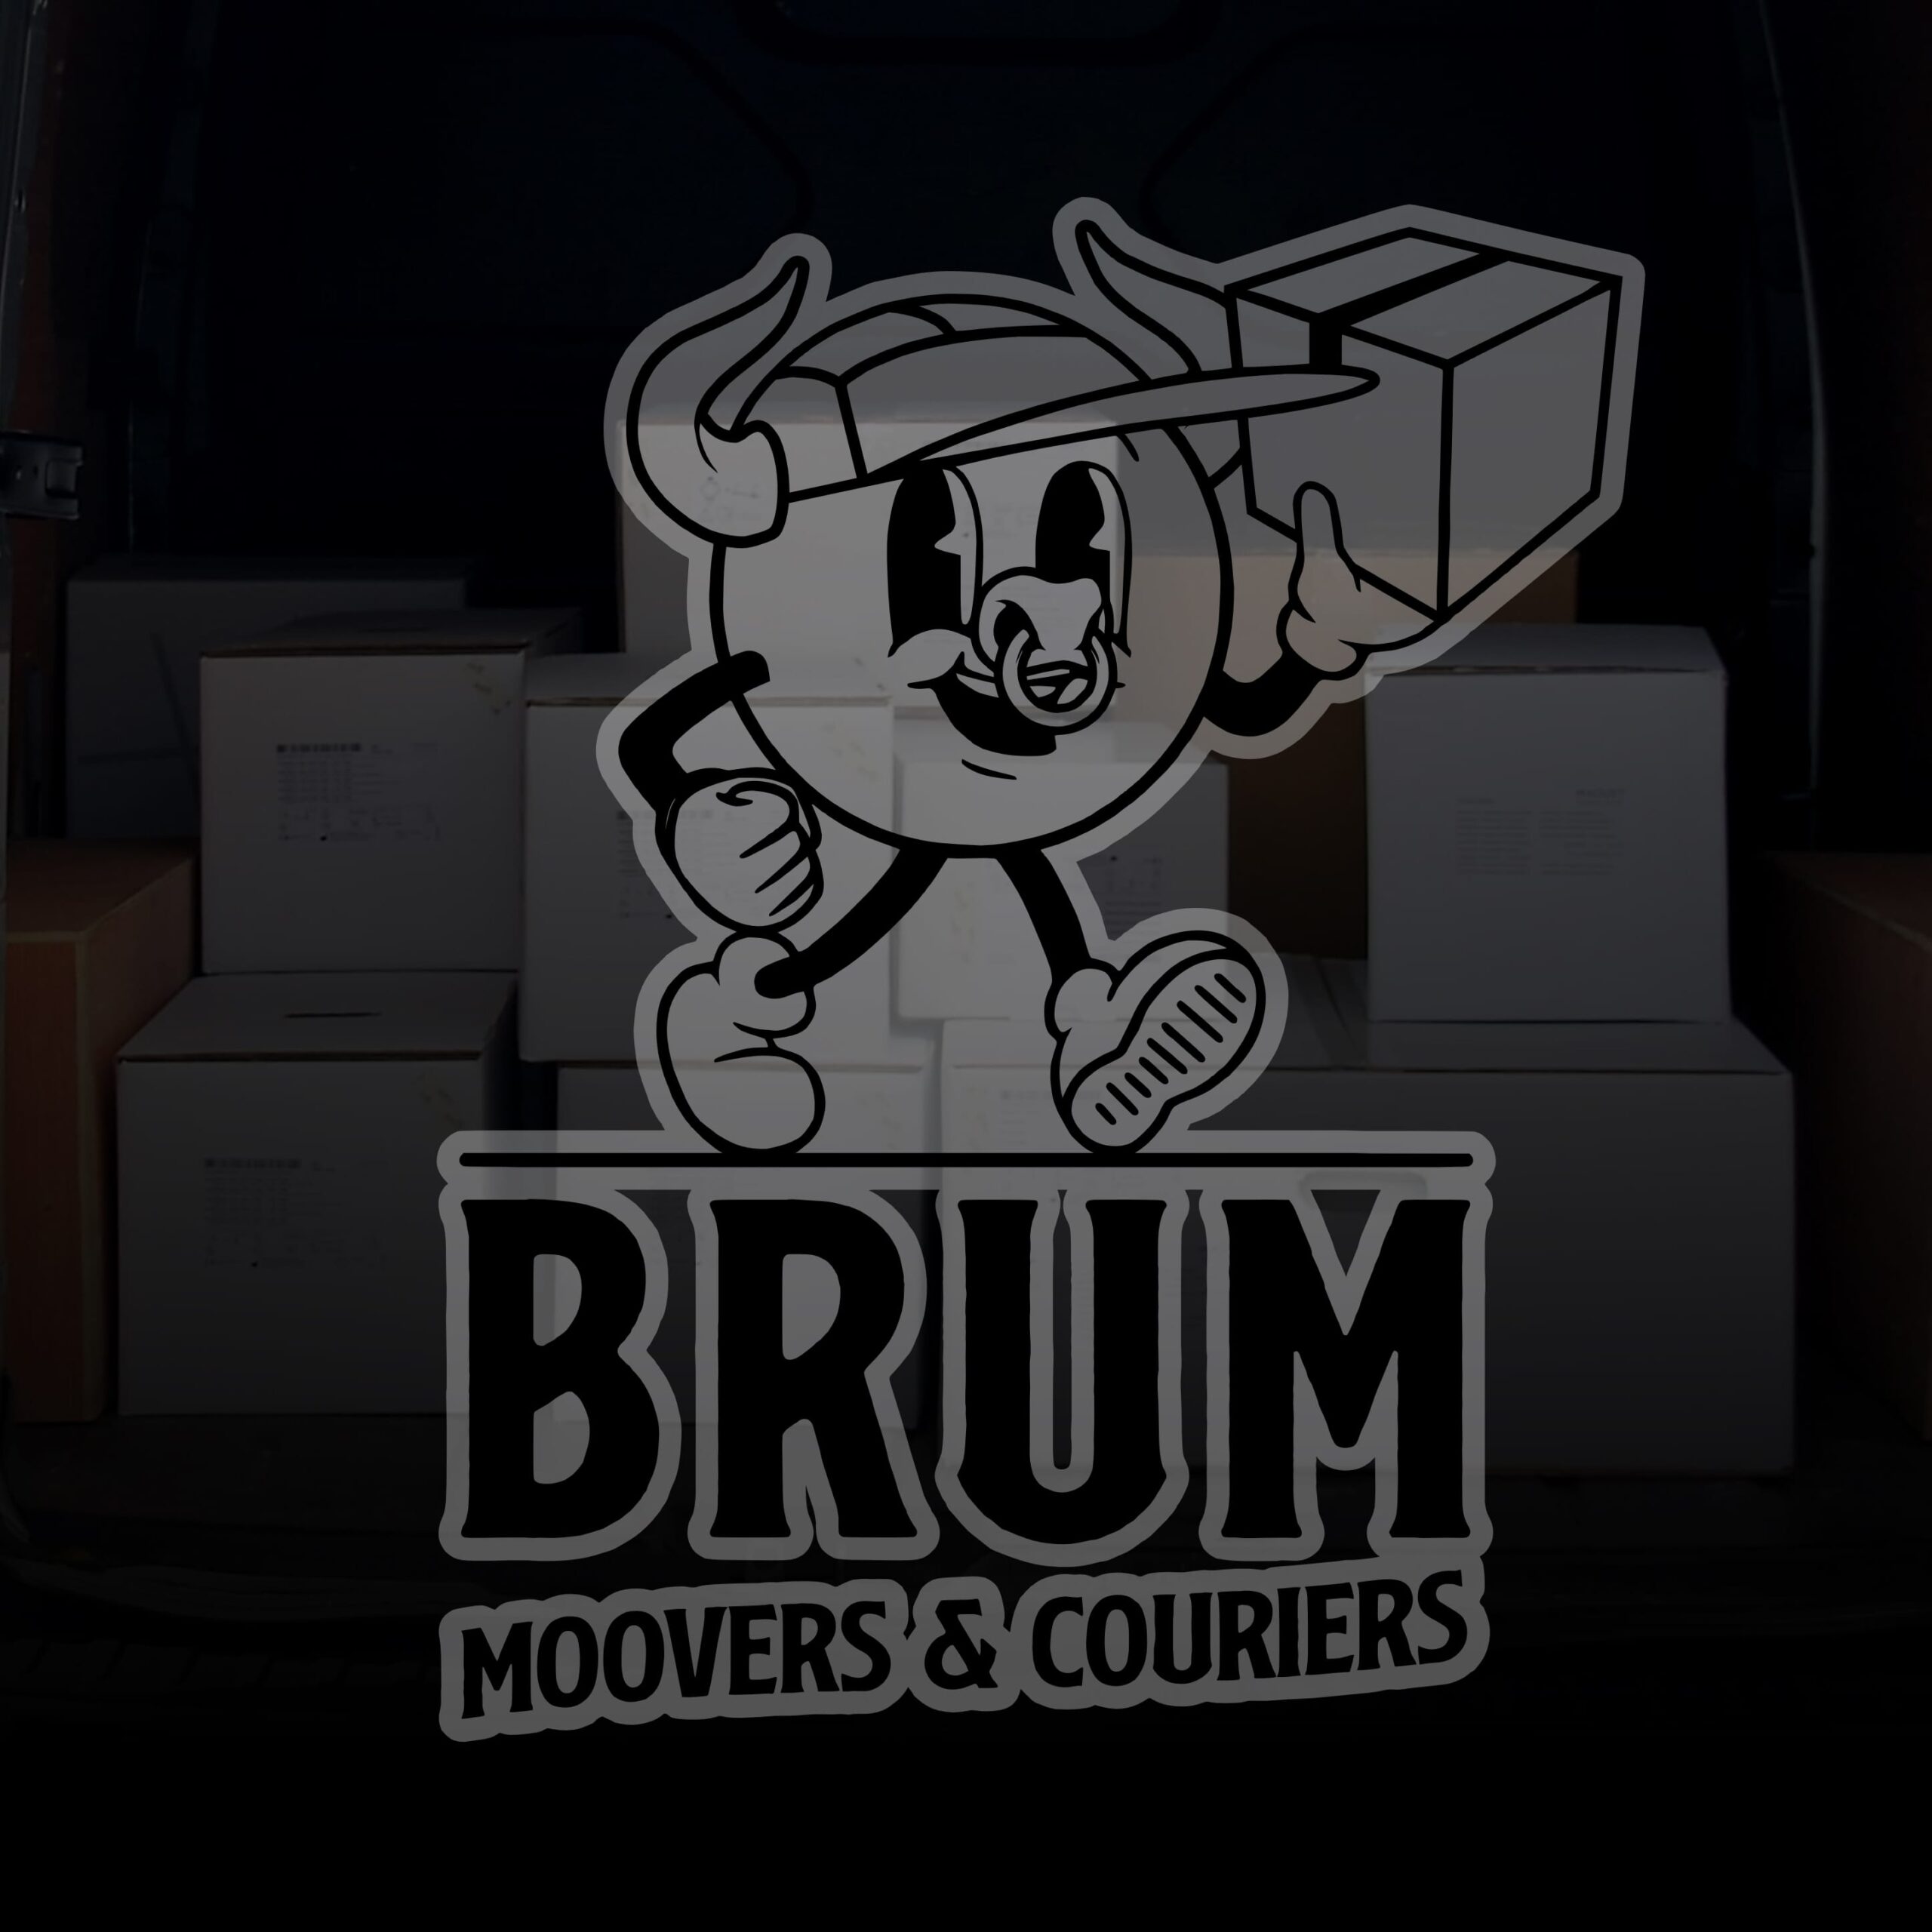 Birmingham Courier Service logo 2